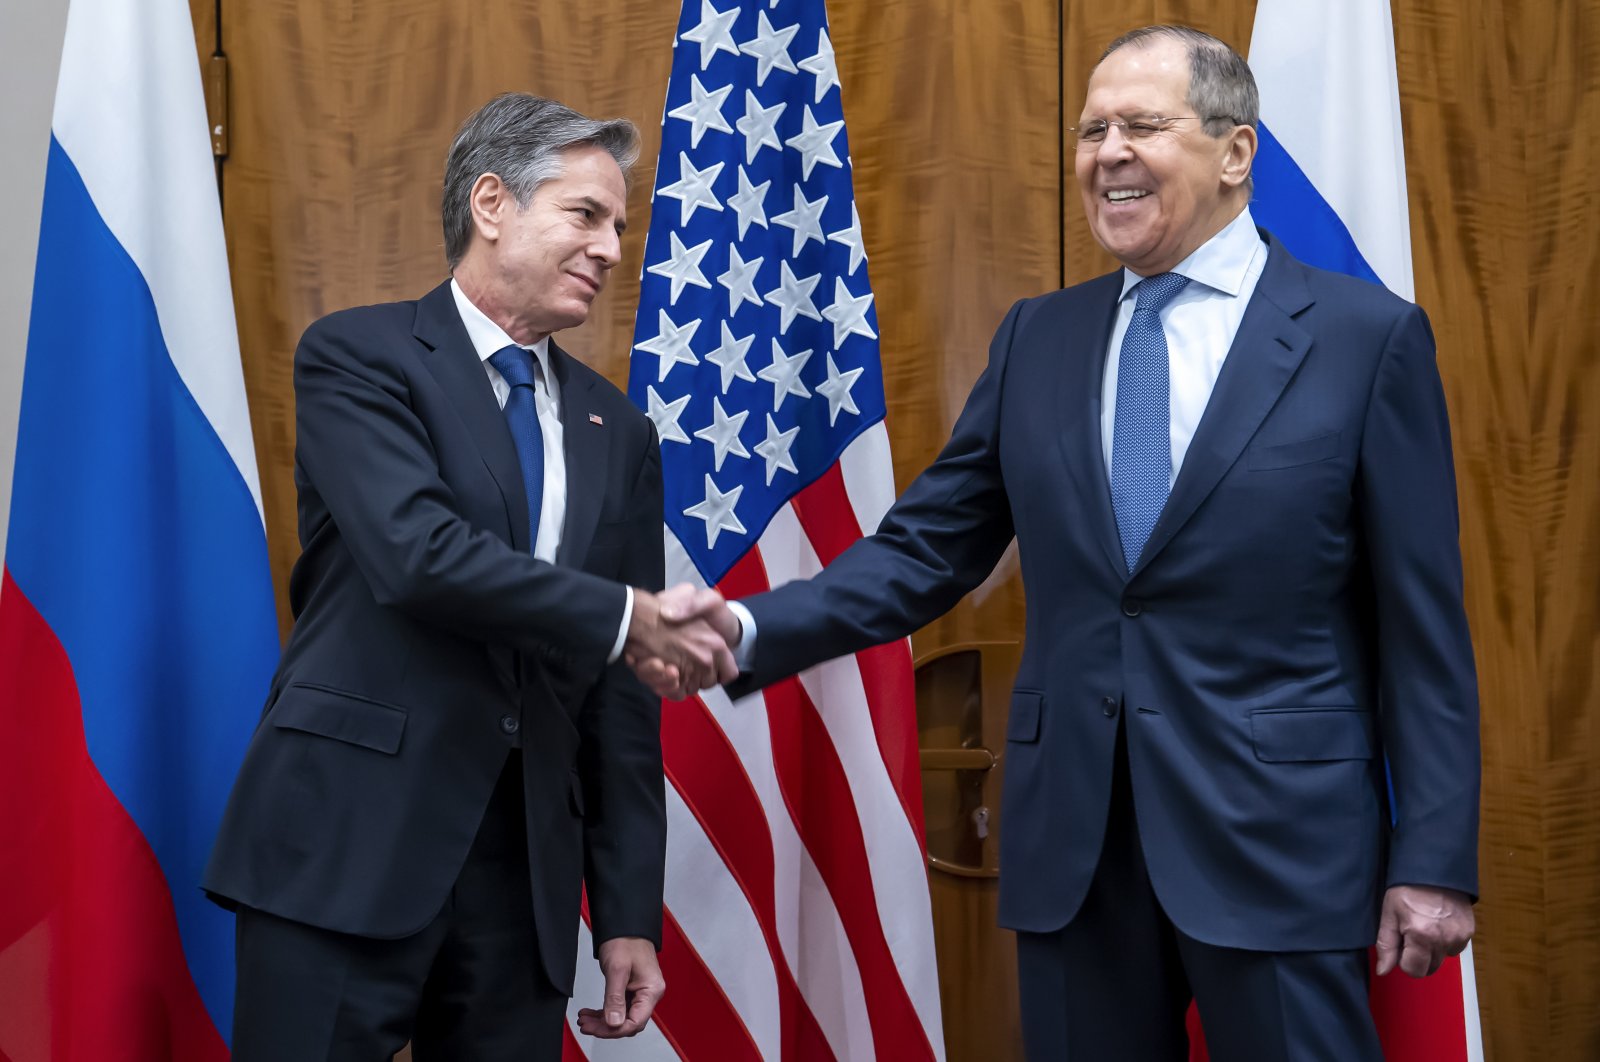 U.S. Secretary of State Antony Blinken (L) and Russian Foreign Minister Sergey Lavrov attend bilateral talks on soaring tensions over Ukraine in Geneva, Switzerland, Jan. 21, 2022. (EPA File Photo)